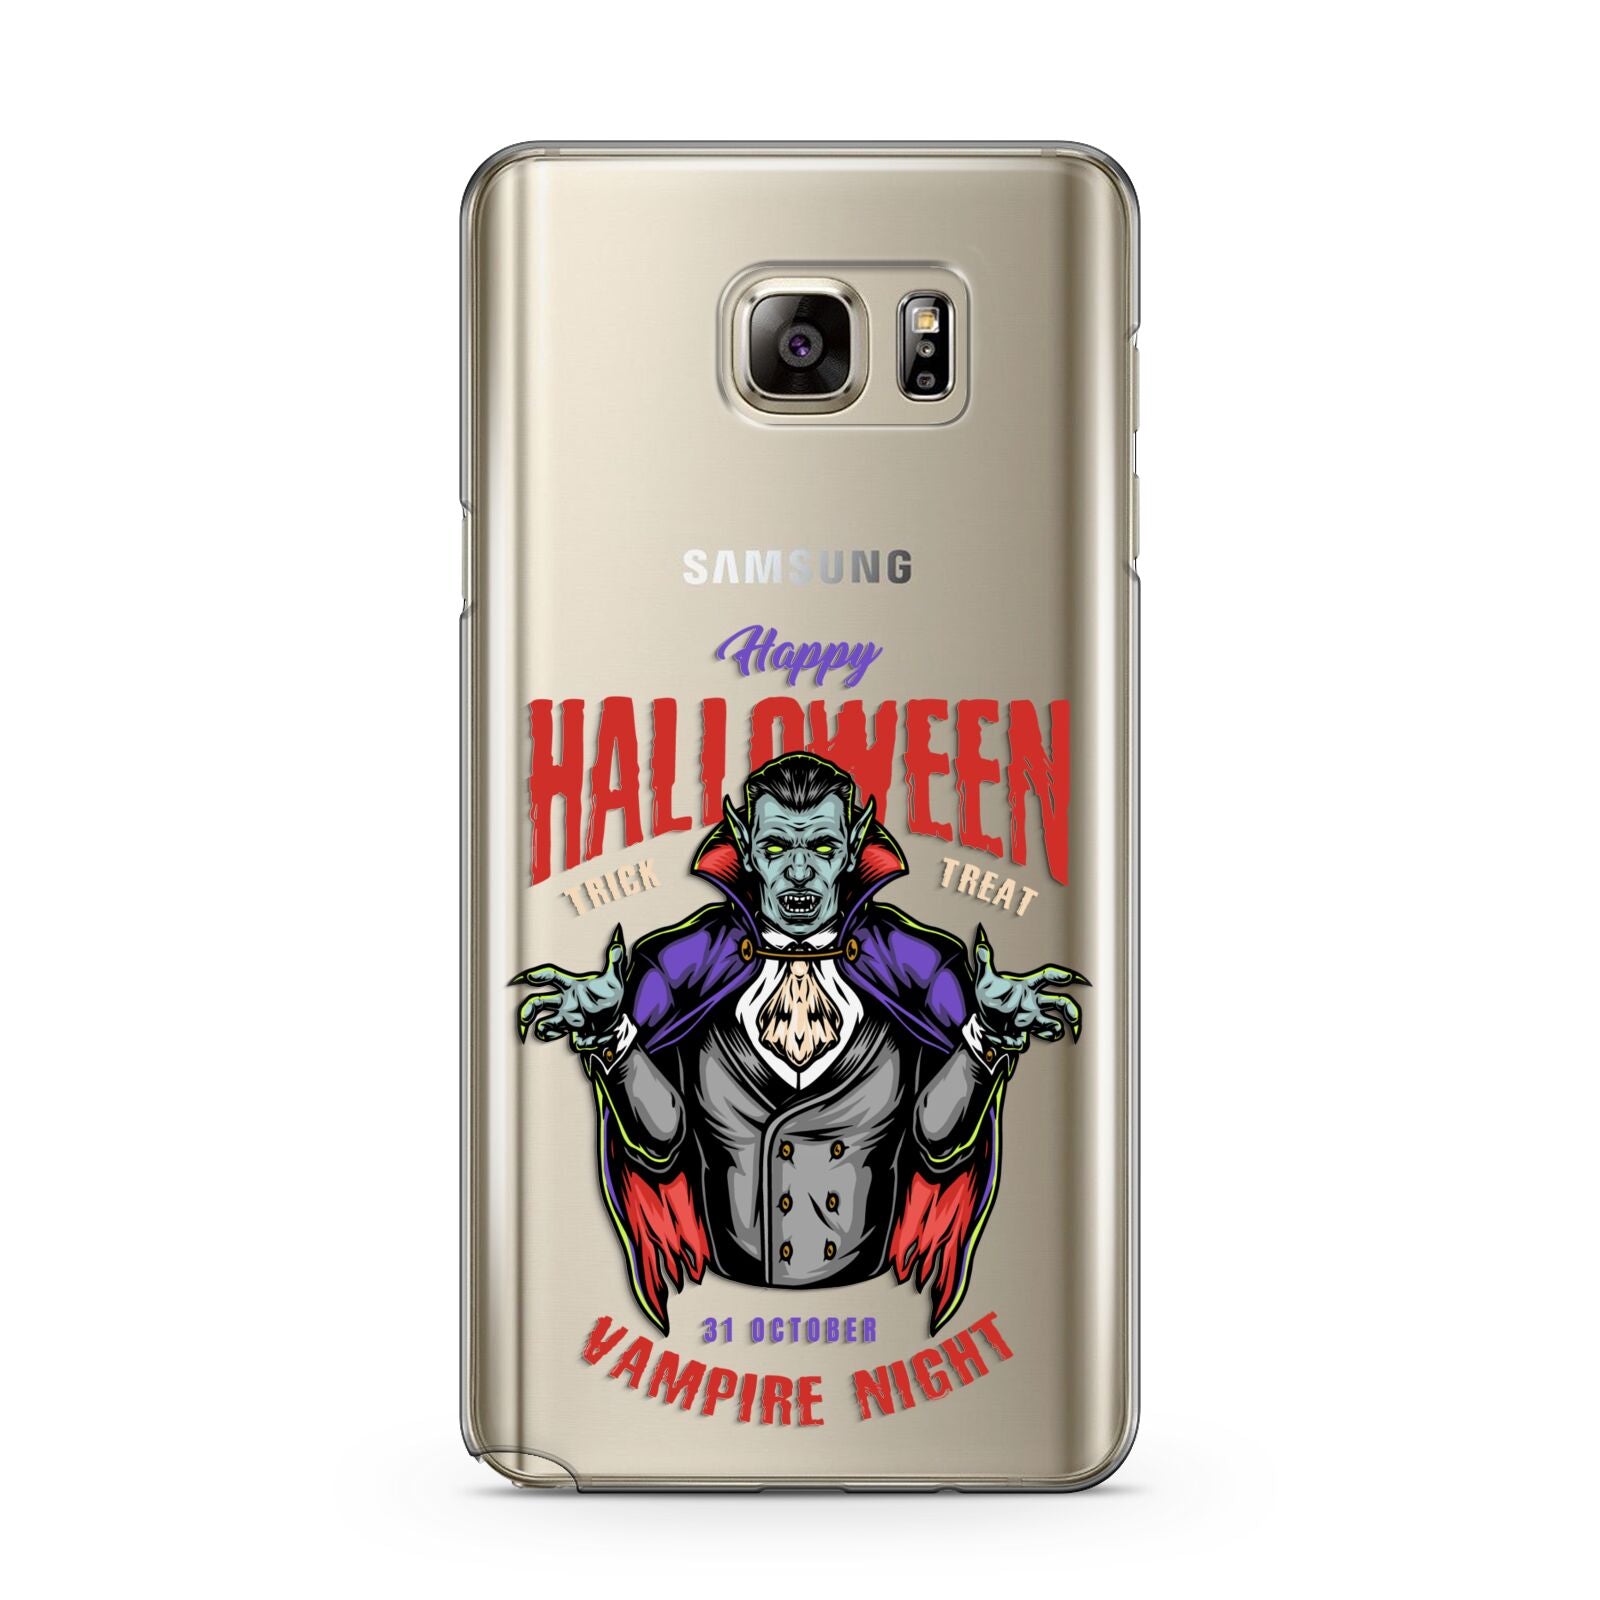 Vampire Night Samsung Galaxy Note 5 Case